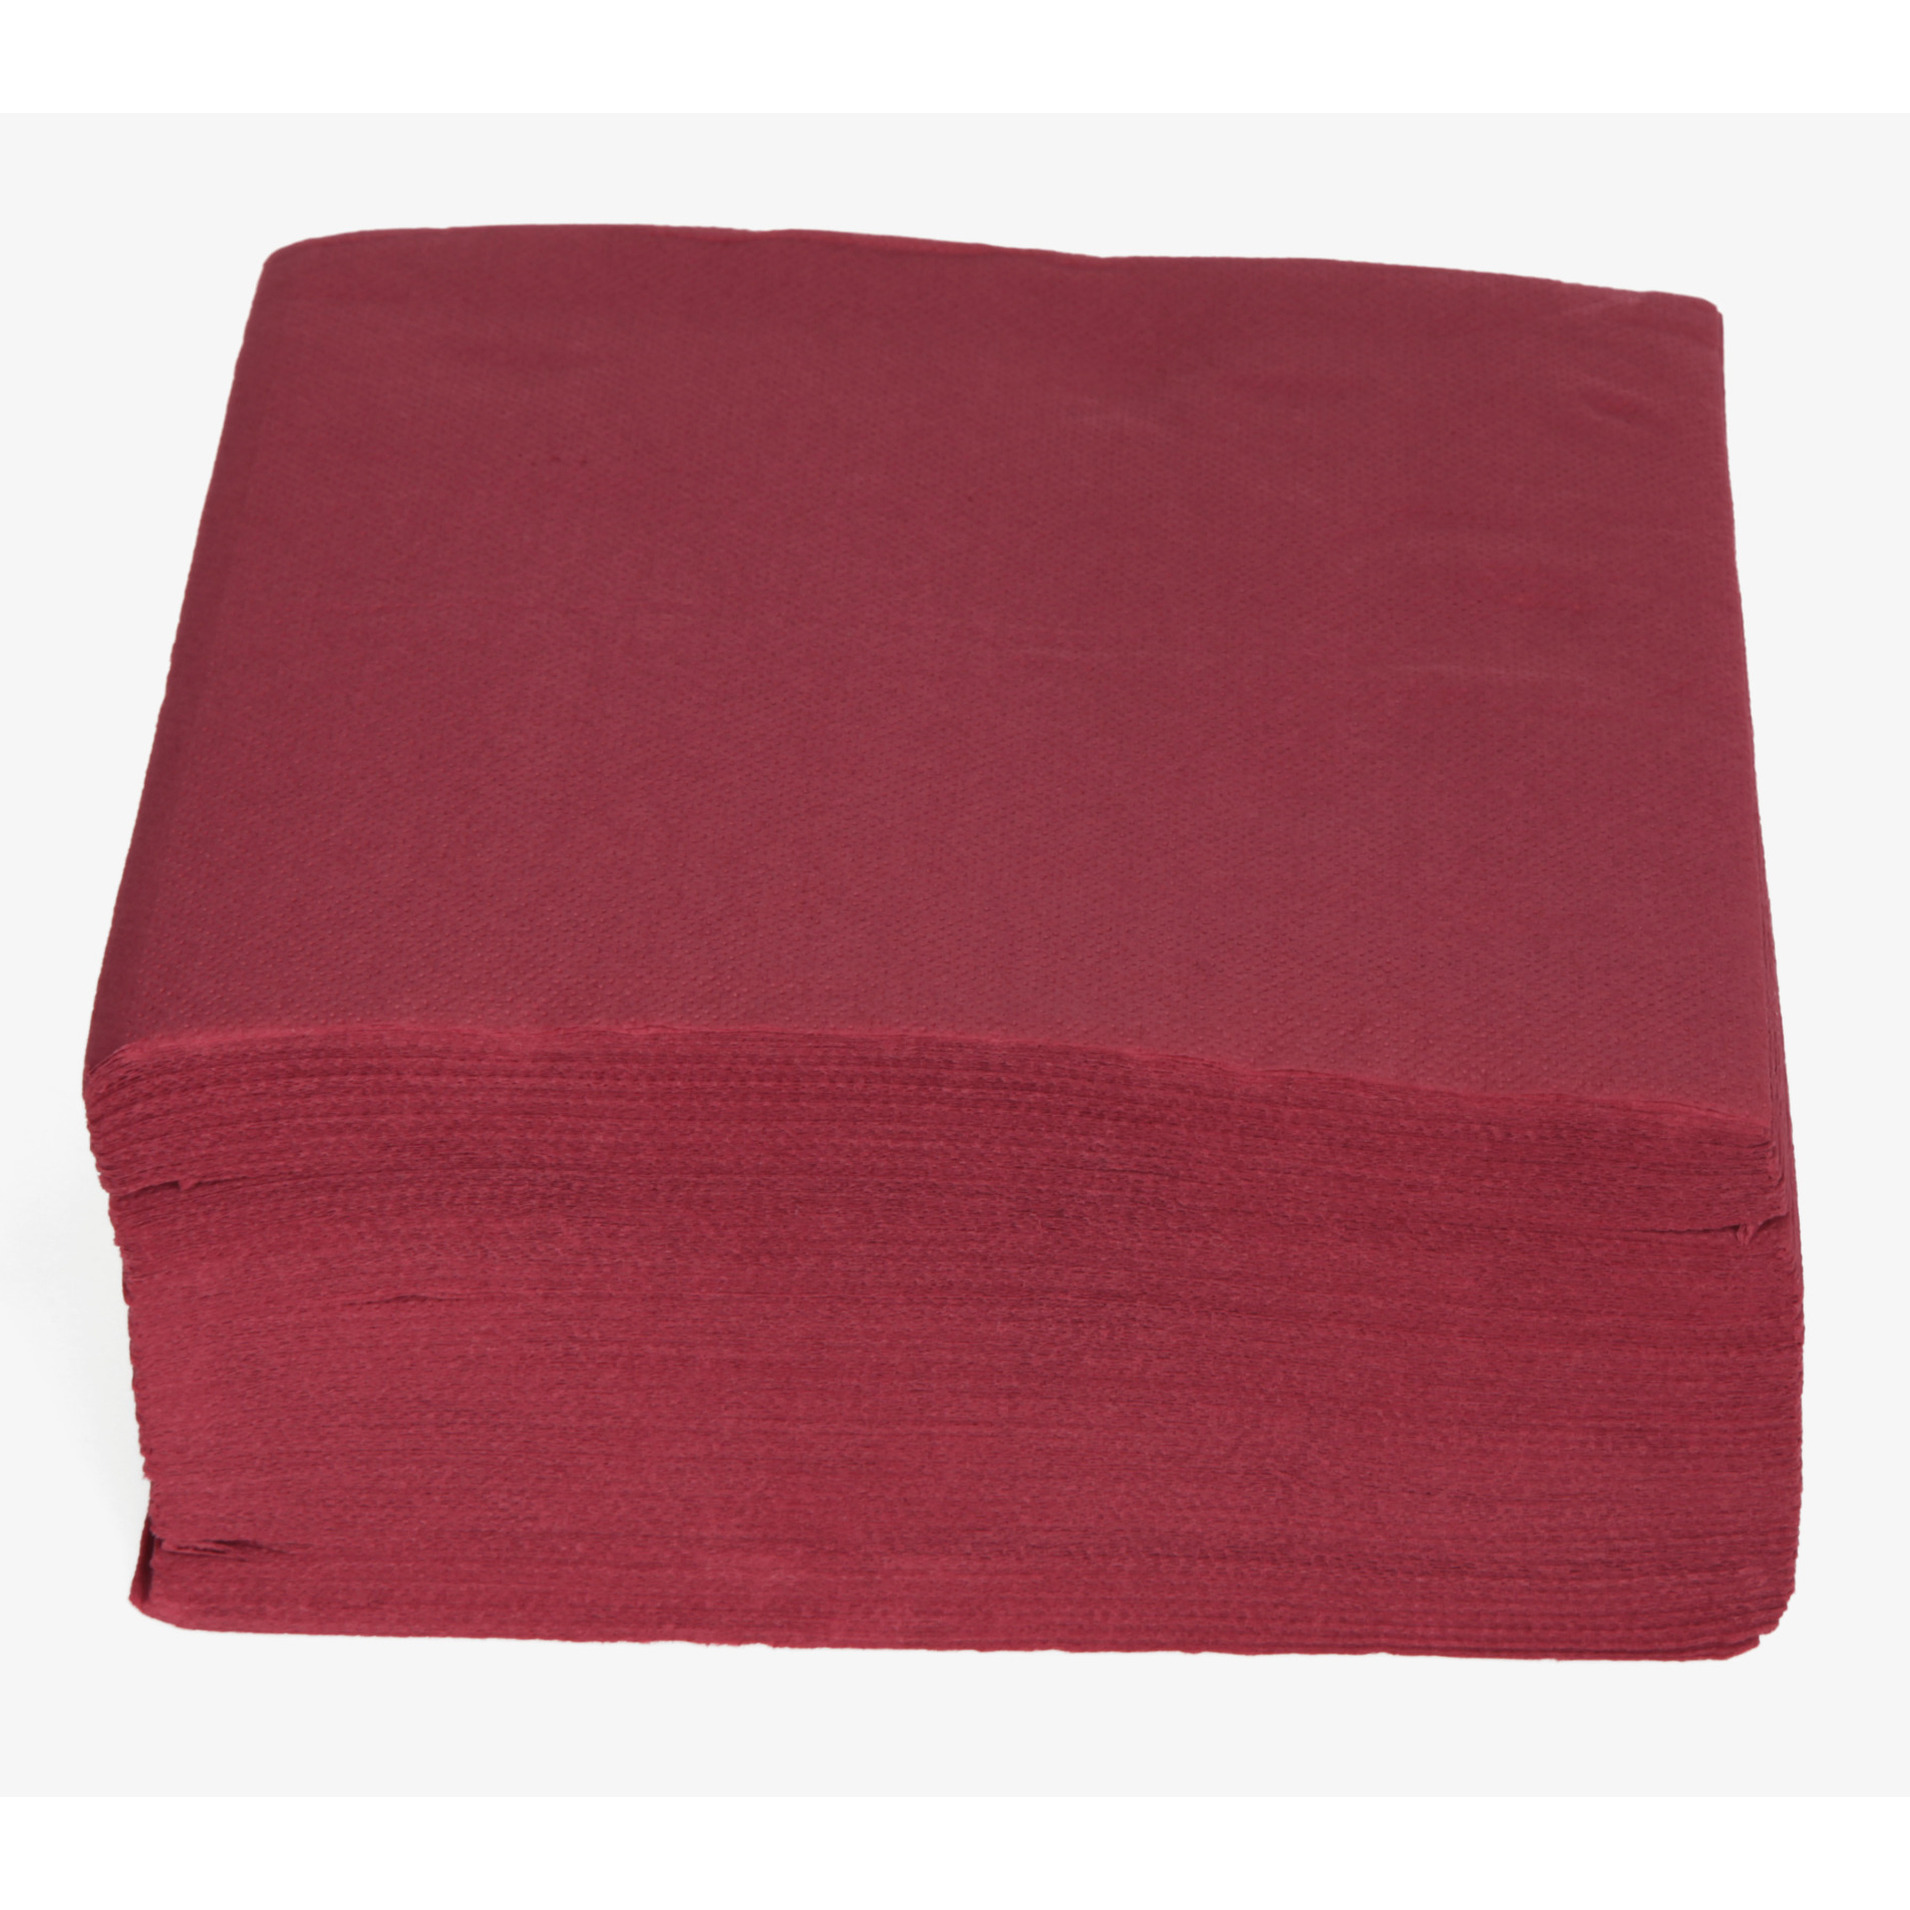 40x stuks luxe kwaliteit servetten bordeaux rood 38 x 38 cm